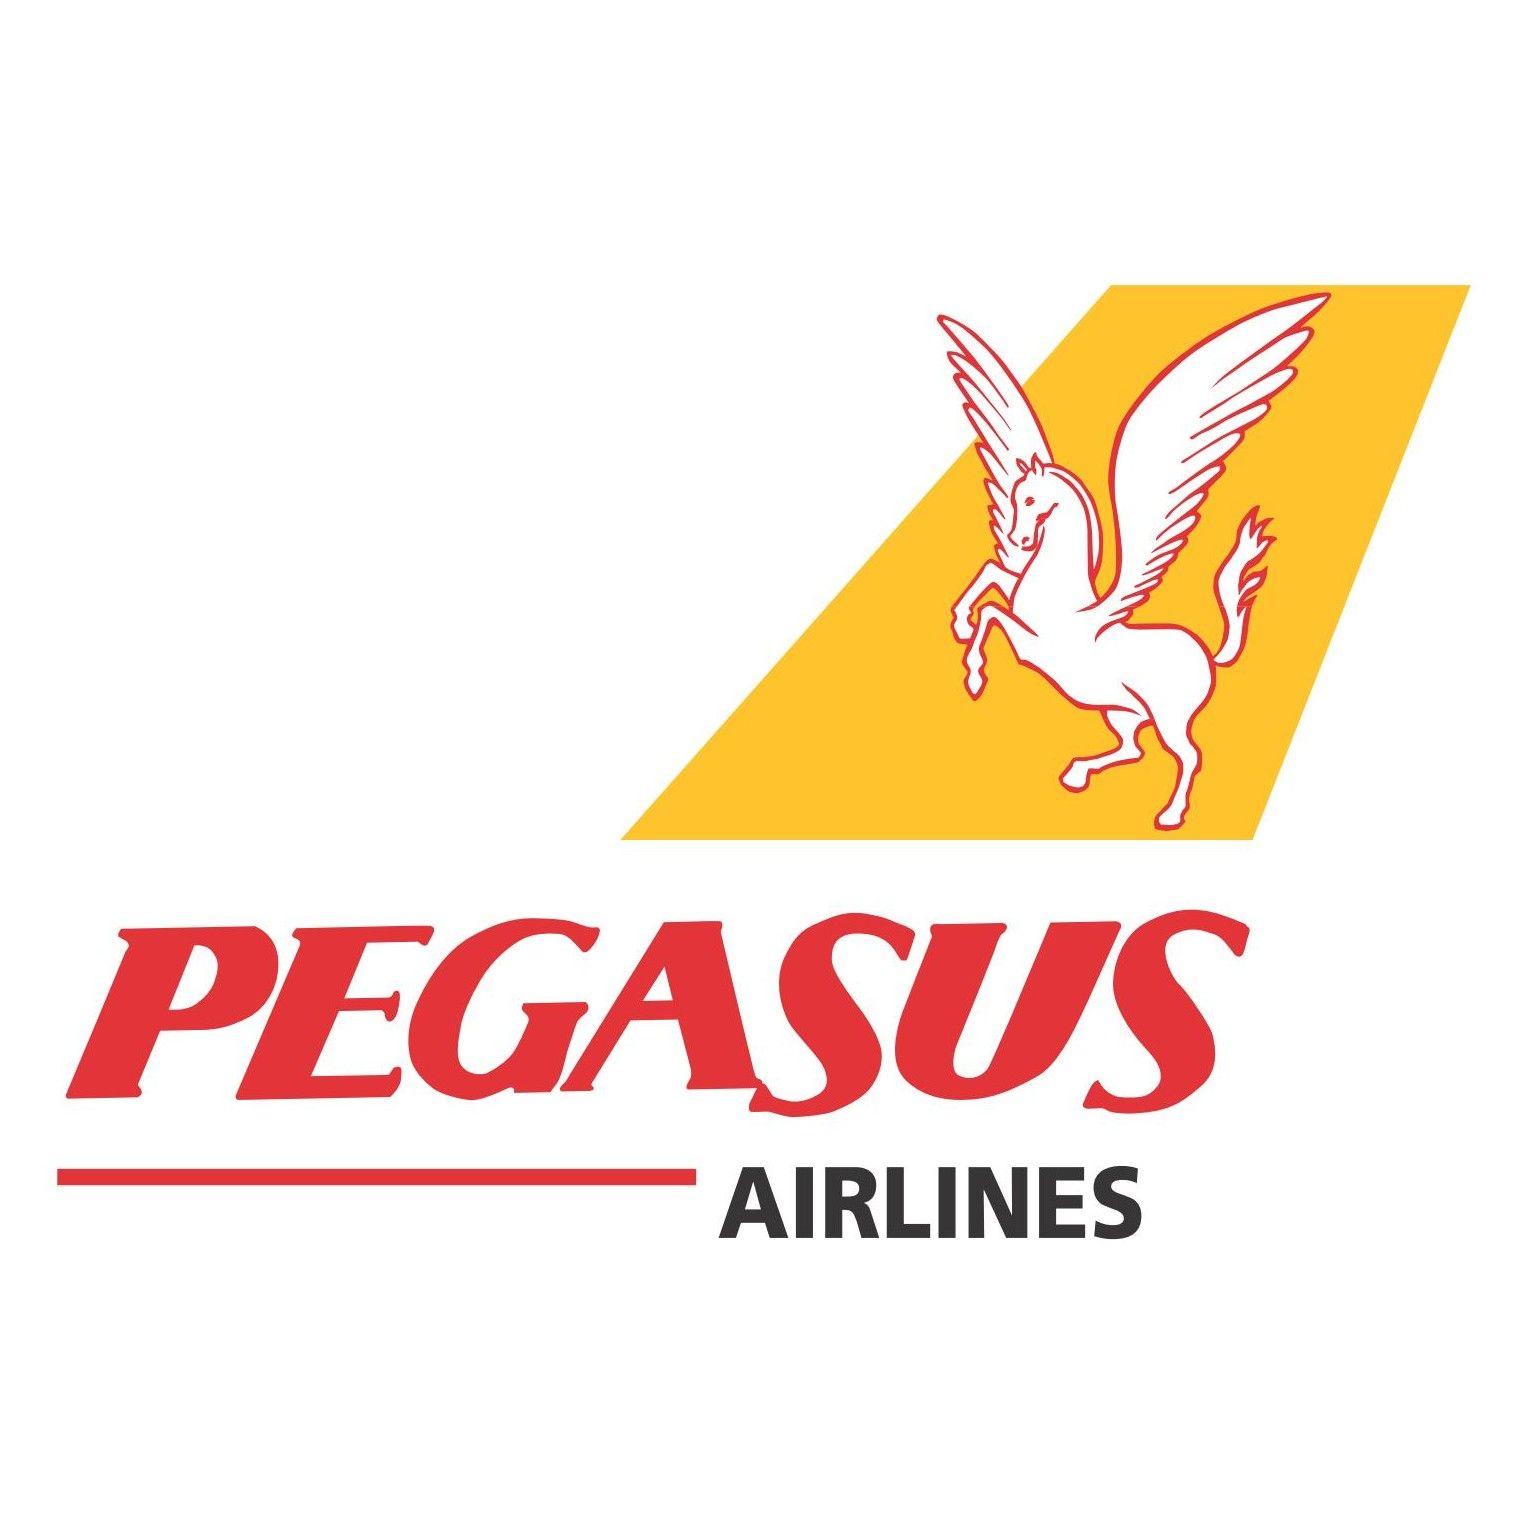 Pegasus Airlines Logo - Pegasus Airlines Logo. Tattoos. Airline logo, Pegasus airlines